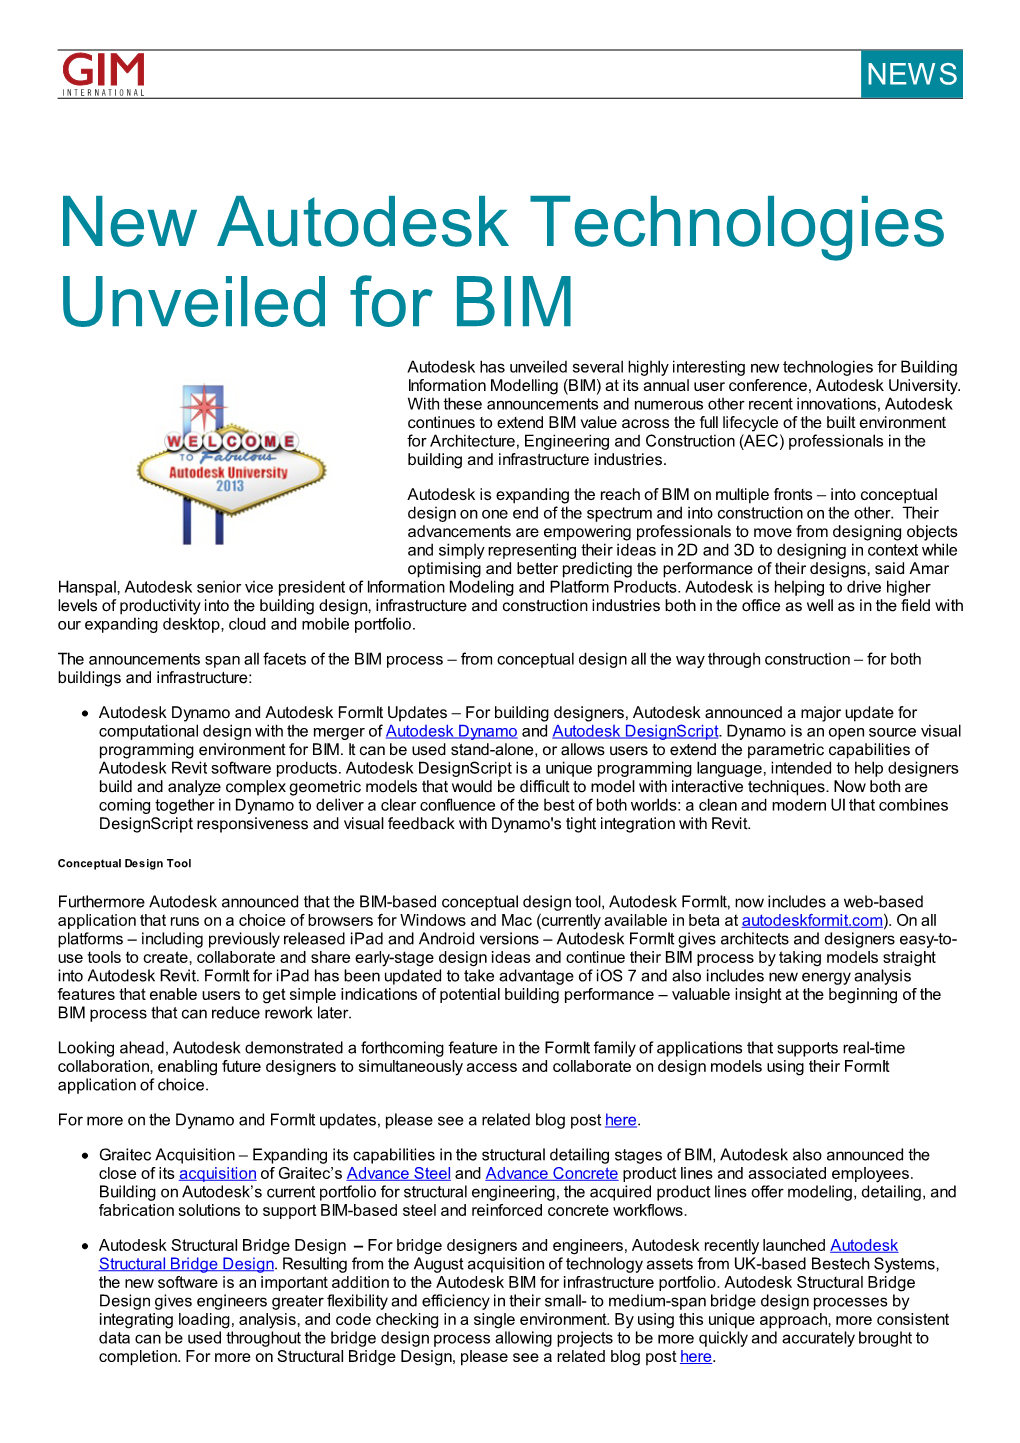 New Autodesk Technologies Unveiled for BIM